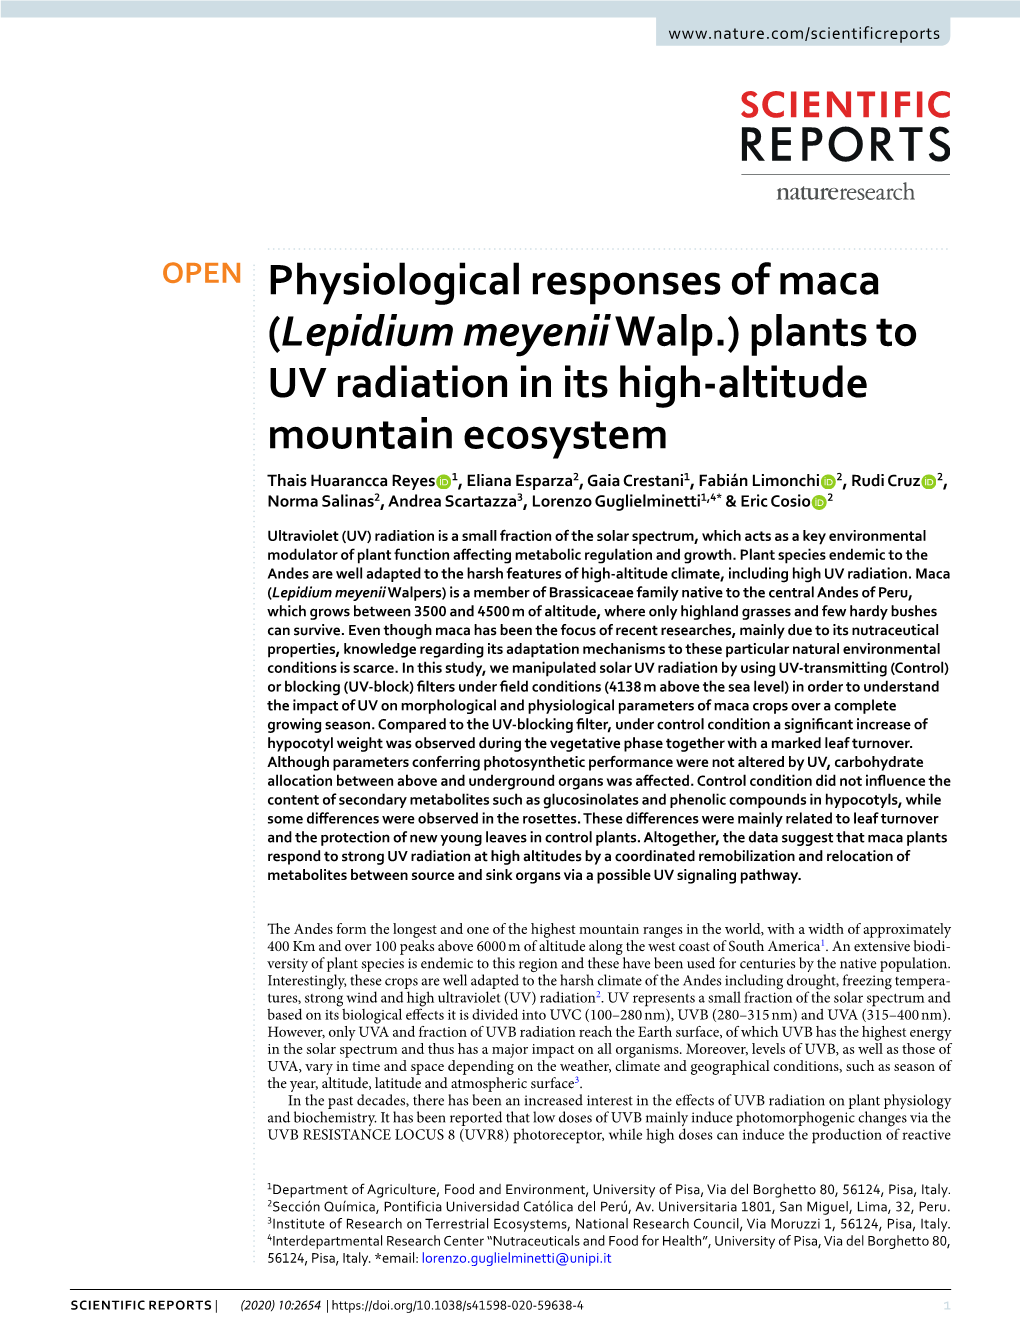 Physiological Responses of Maca (Lepidium Meyenii Walp.) Plants to UV Radiation in Its High-Altitude Mountain Ecosystem